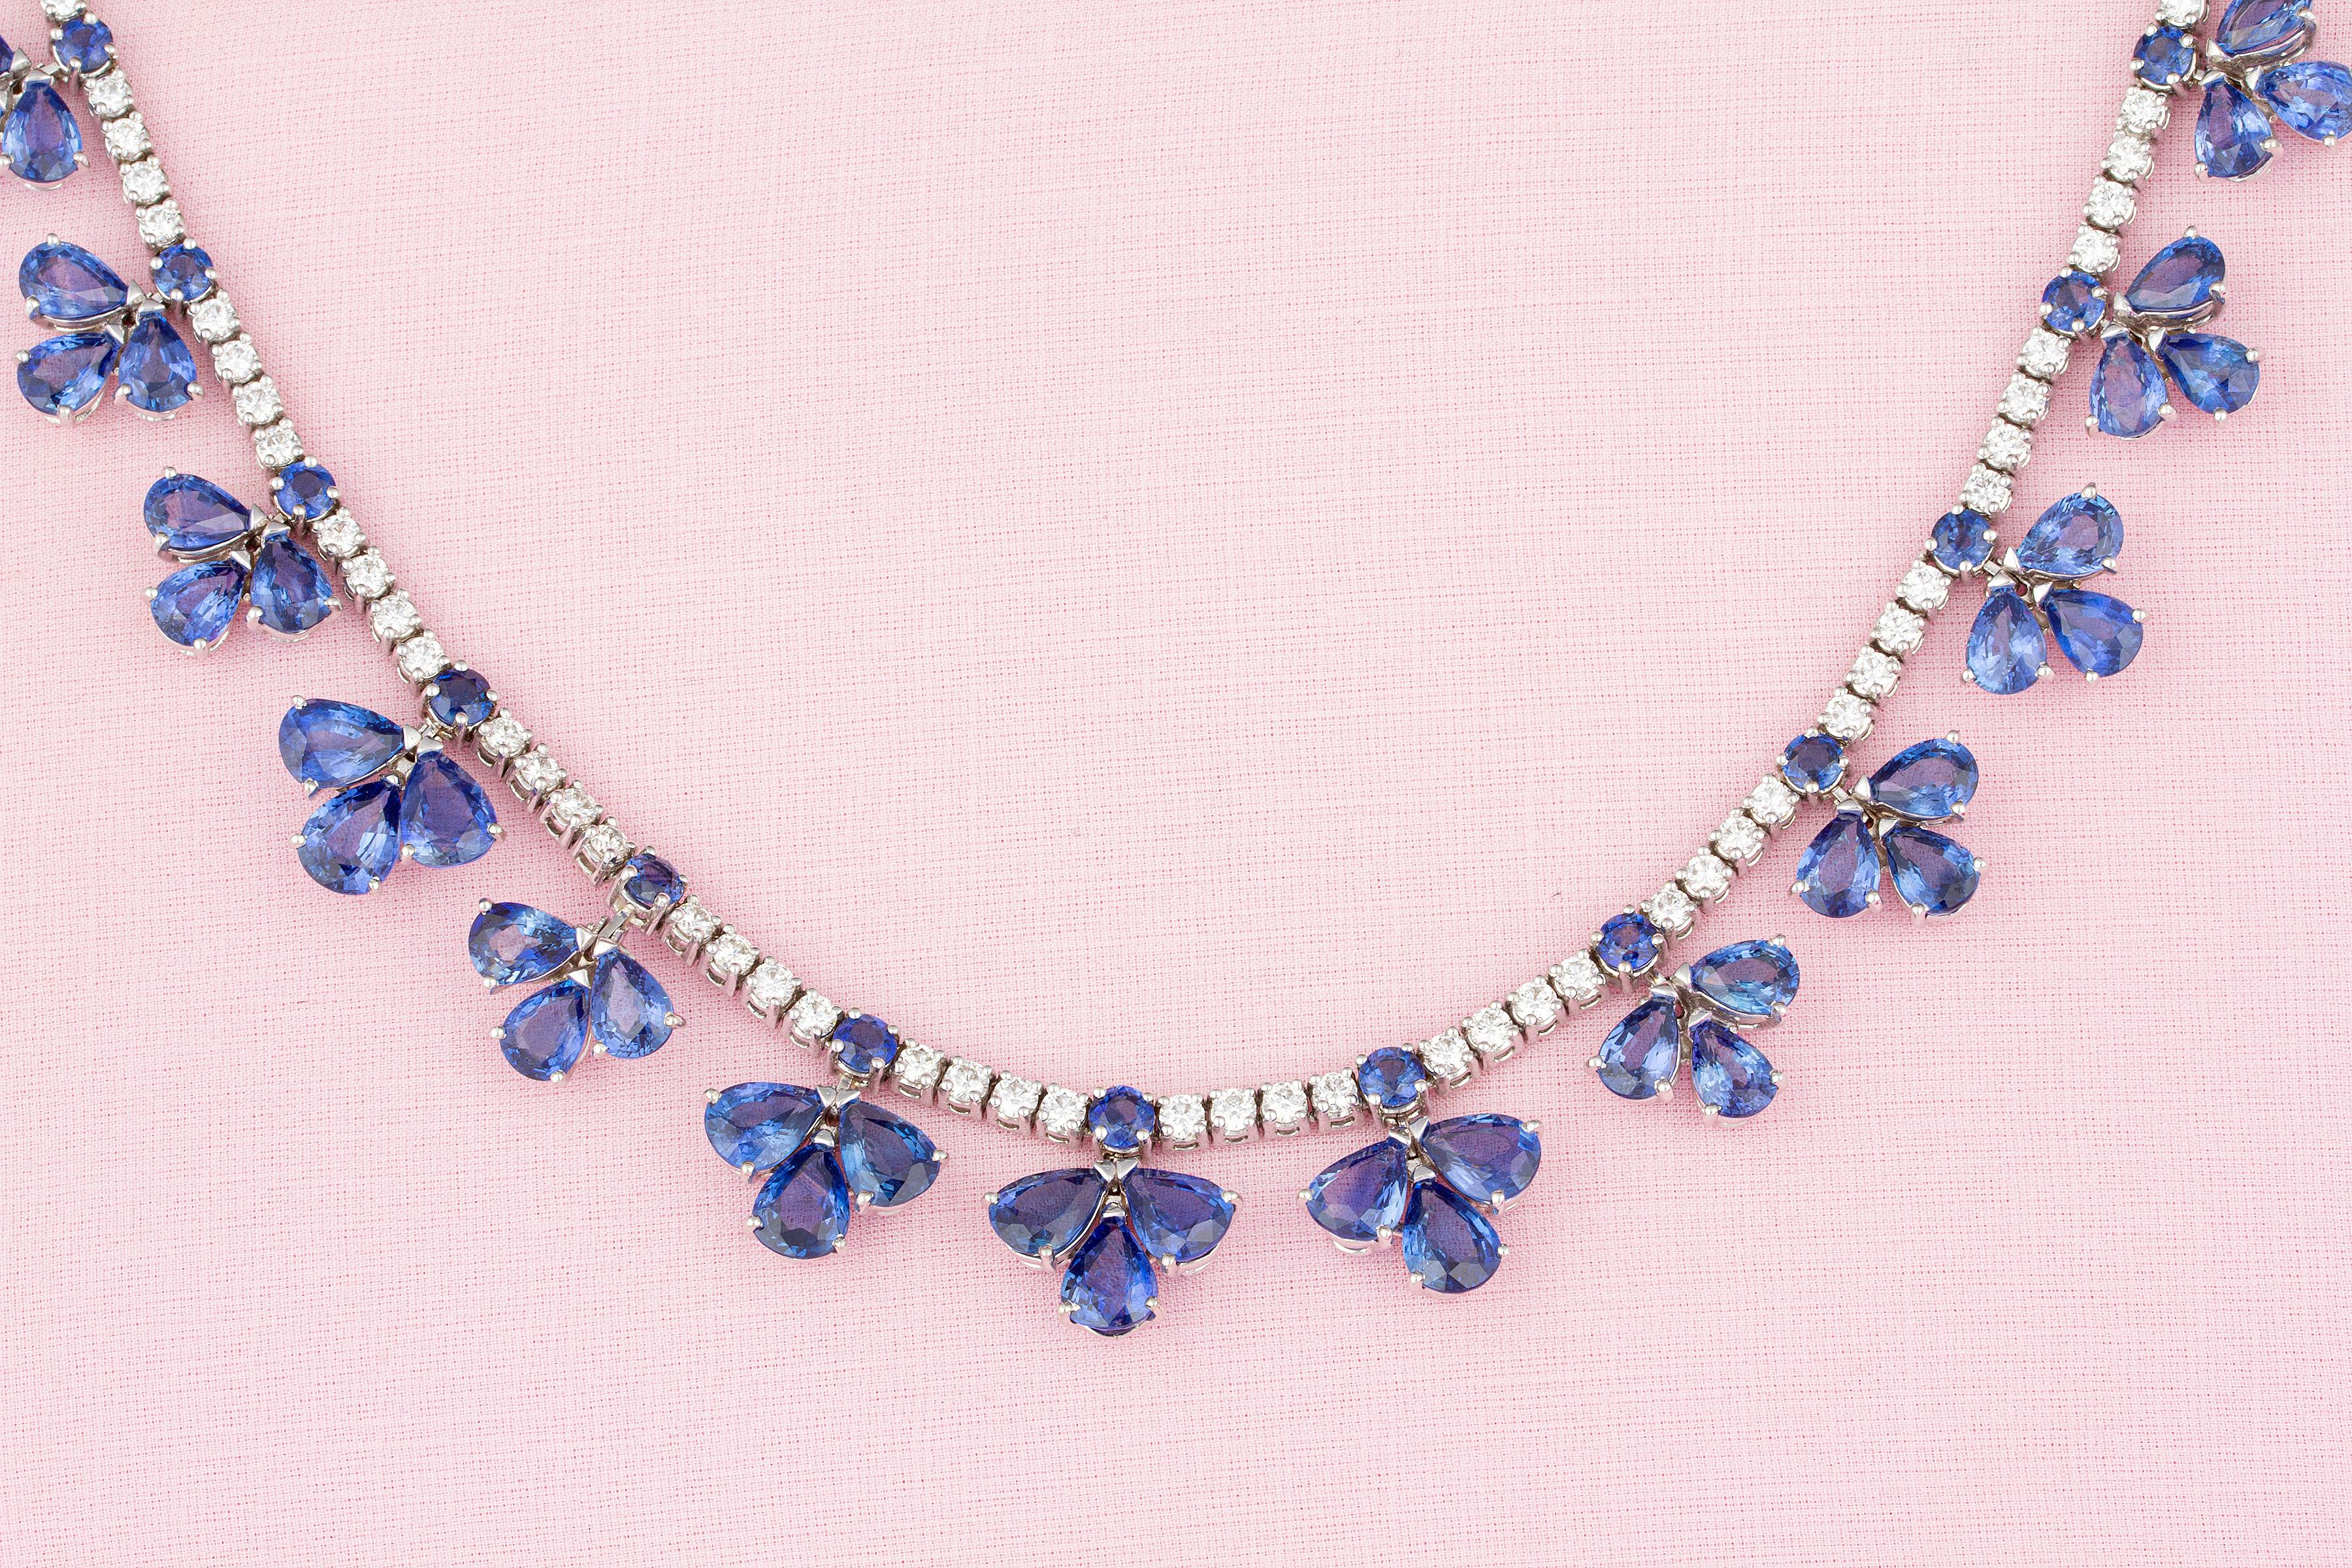 ceylon sapphire necklace